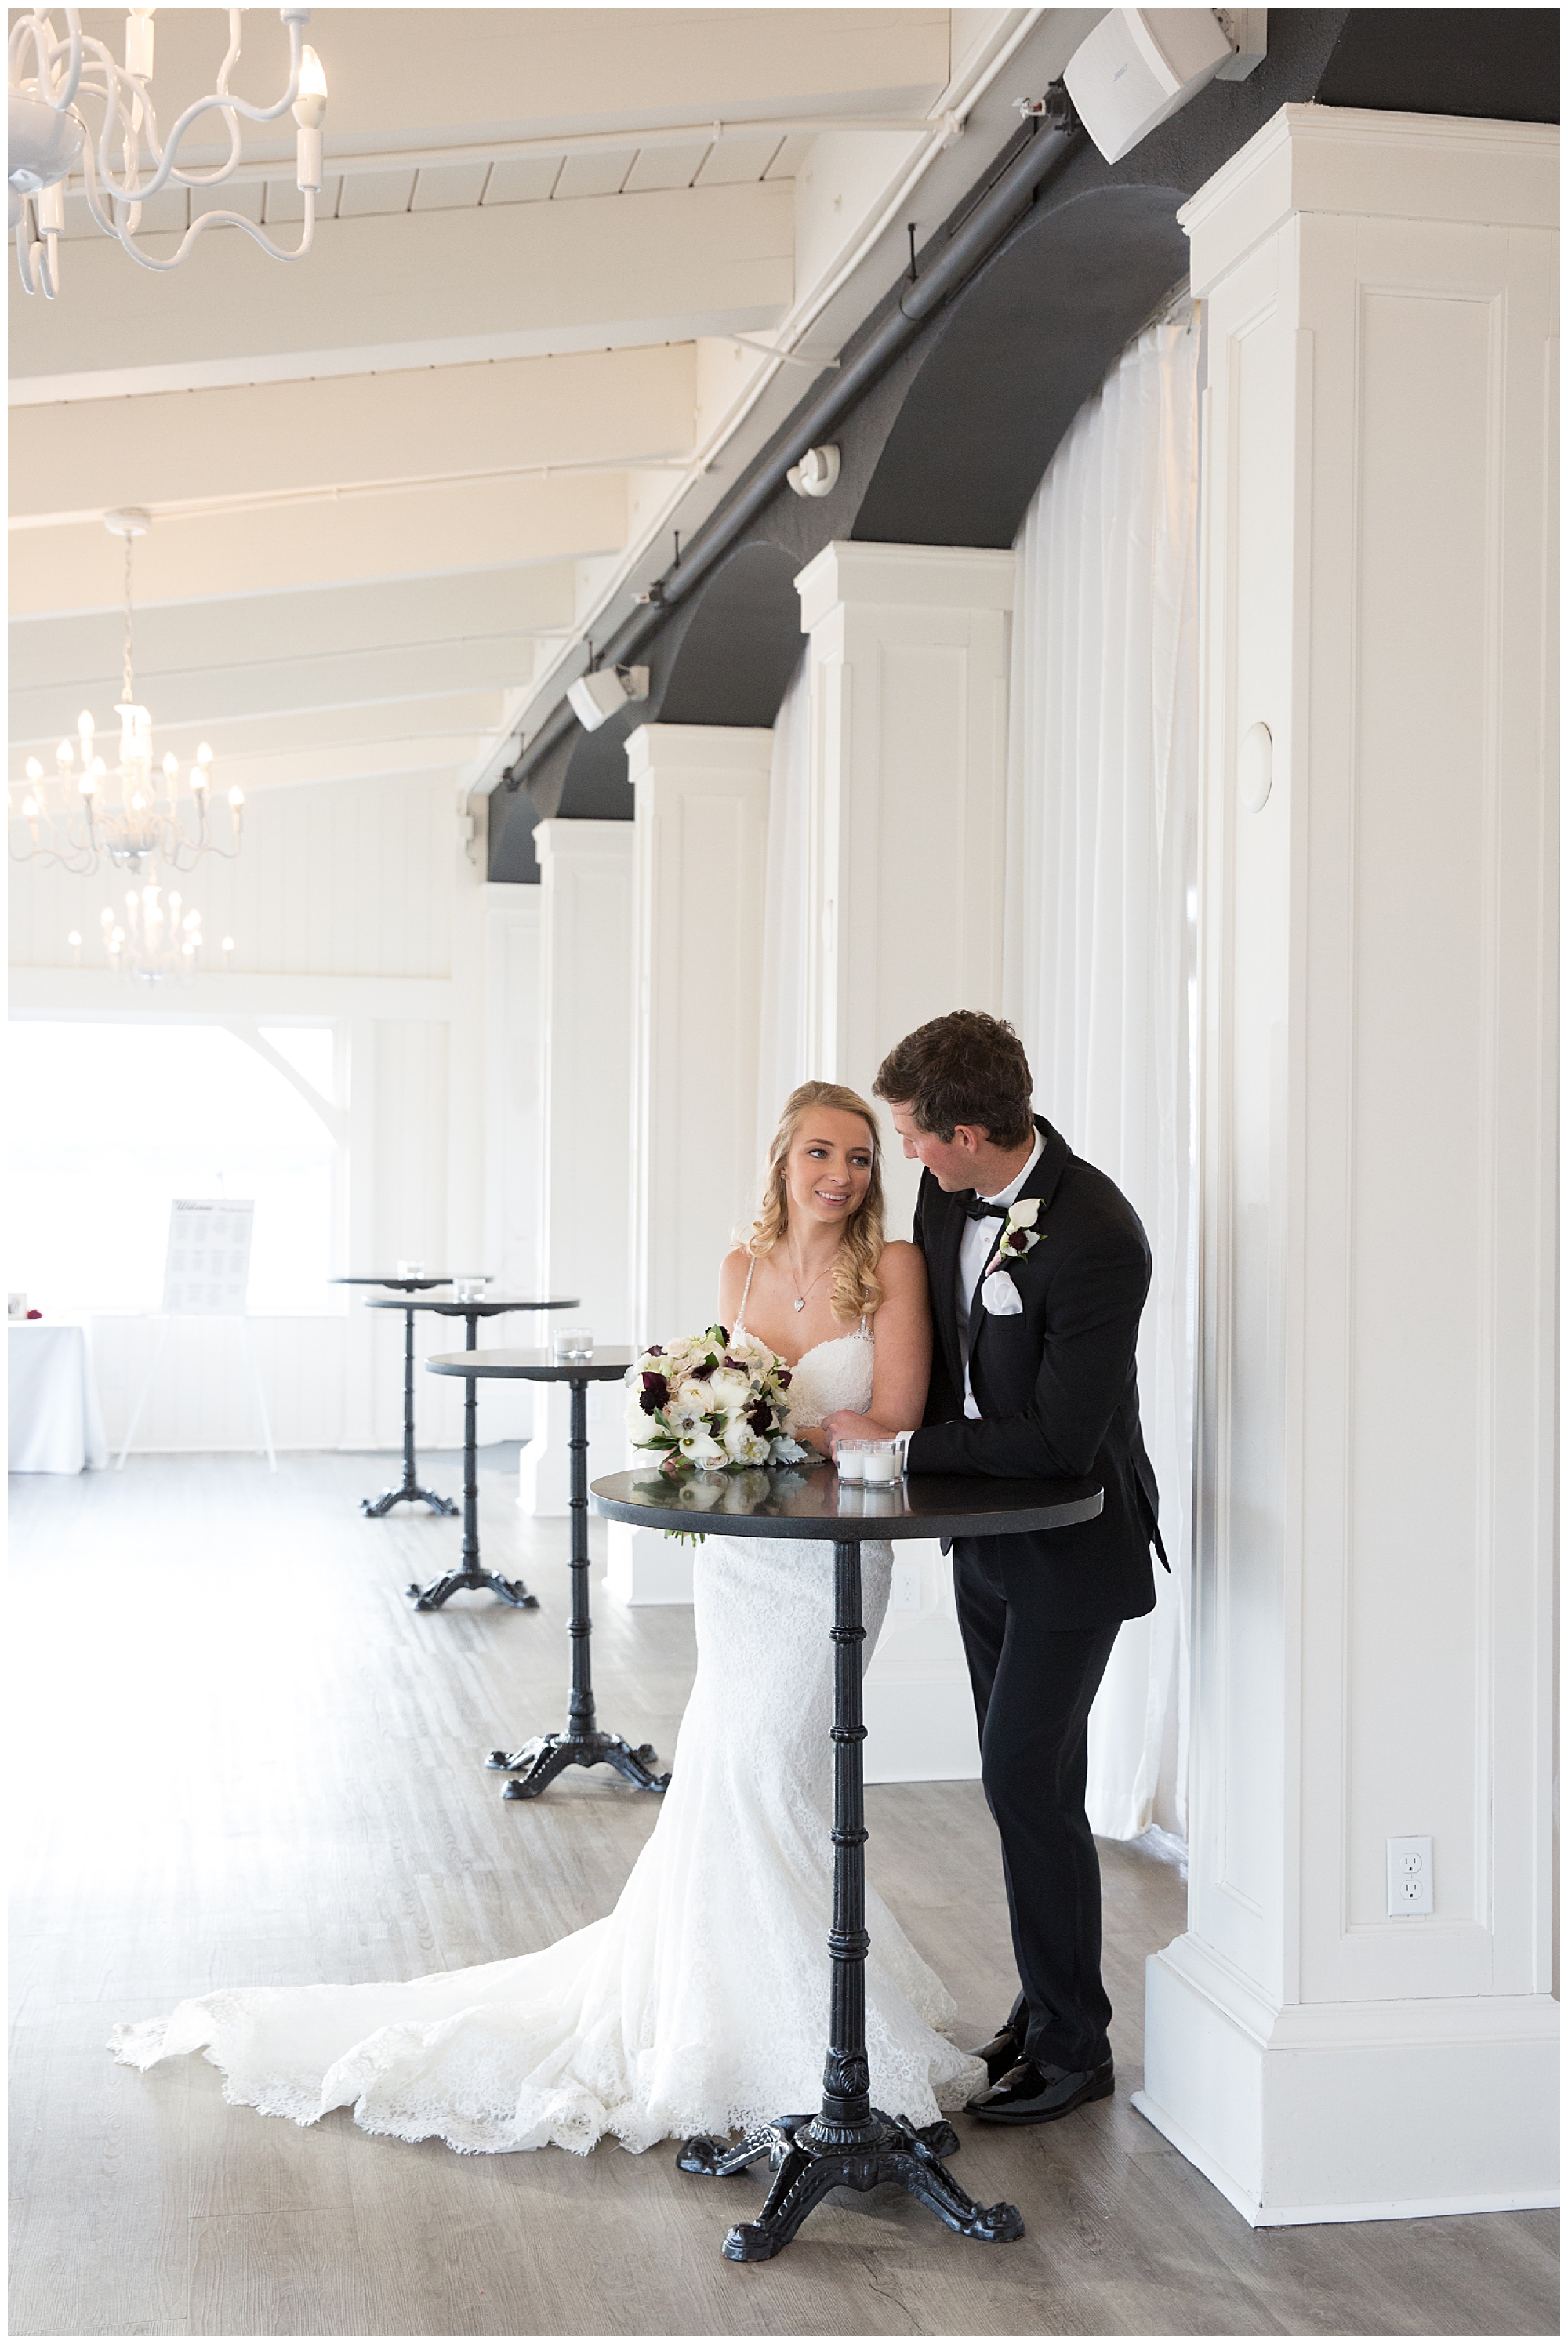 Belle Mer - A Longwood Venue Wedding Photography 